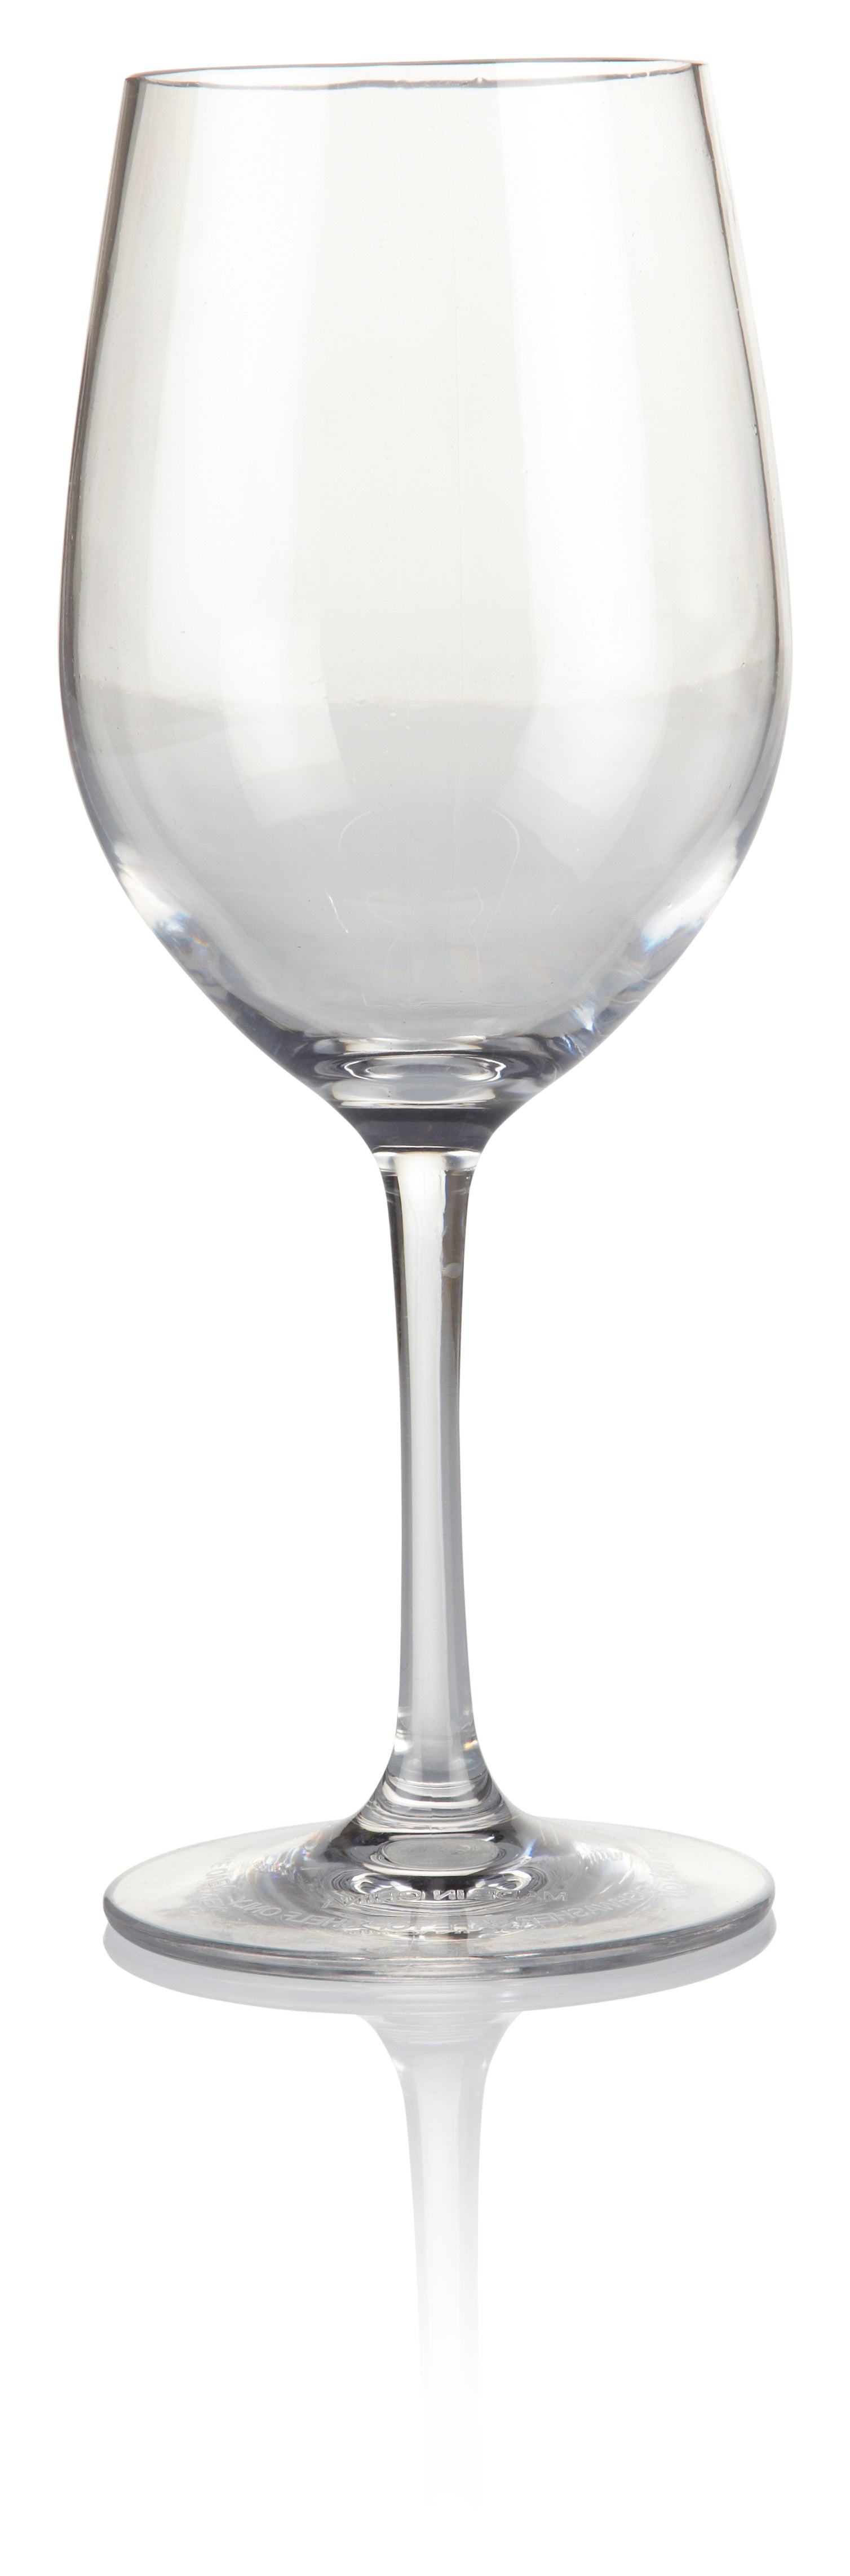 Unbreakable Wine glass